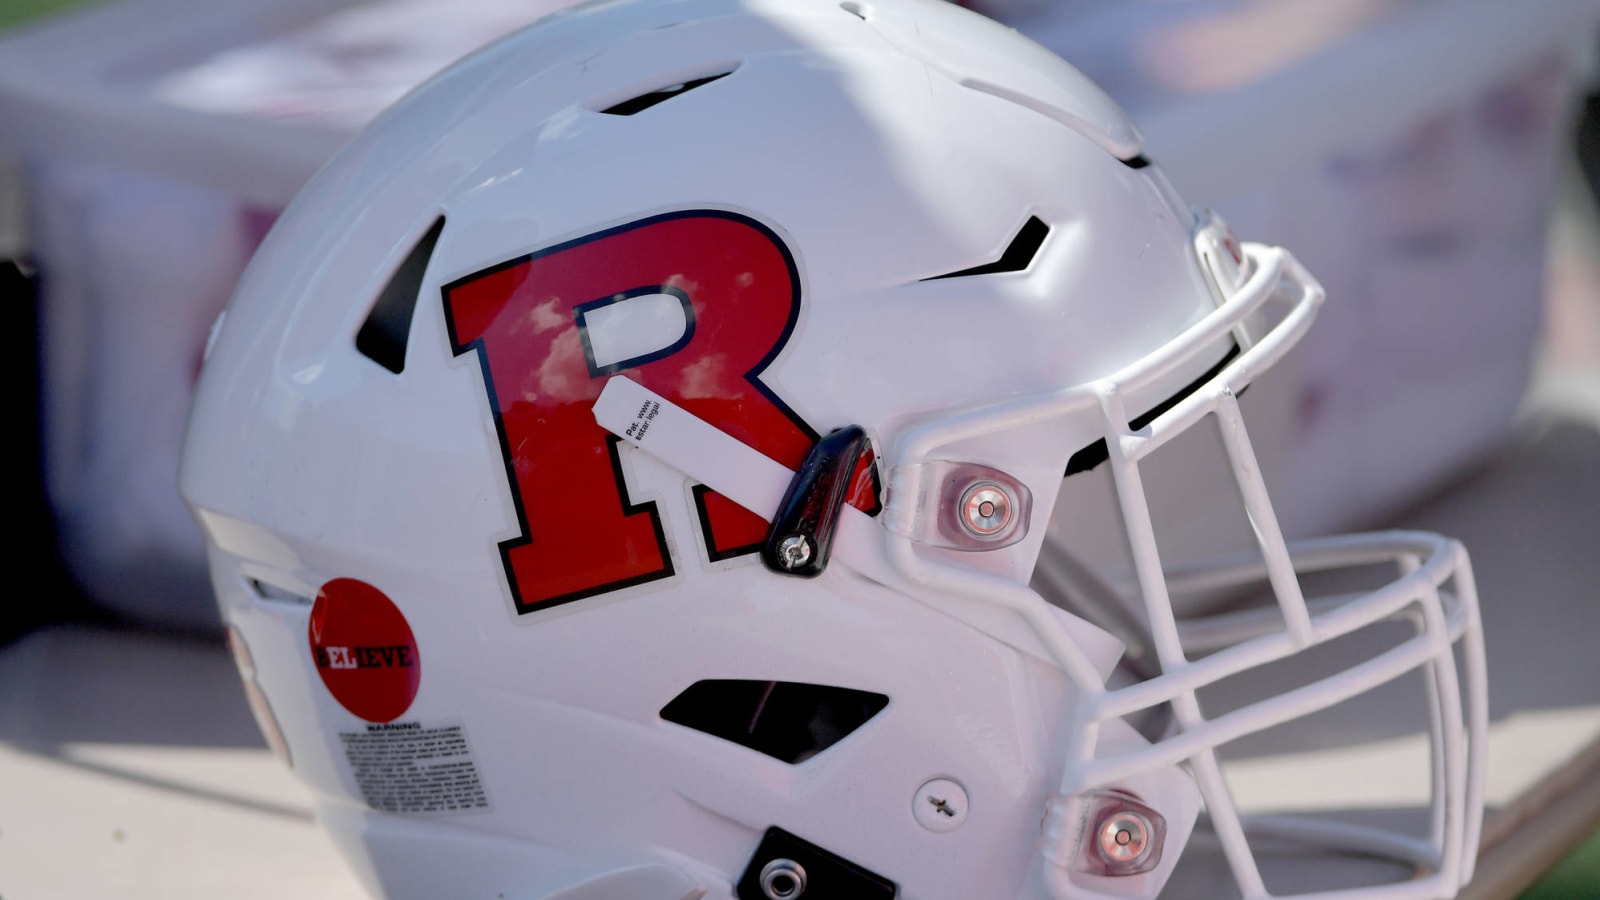 Rutgers football had at least 30 positive coronavirus cases 